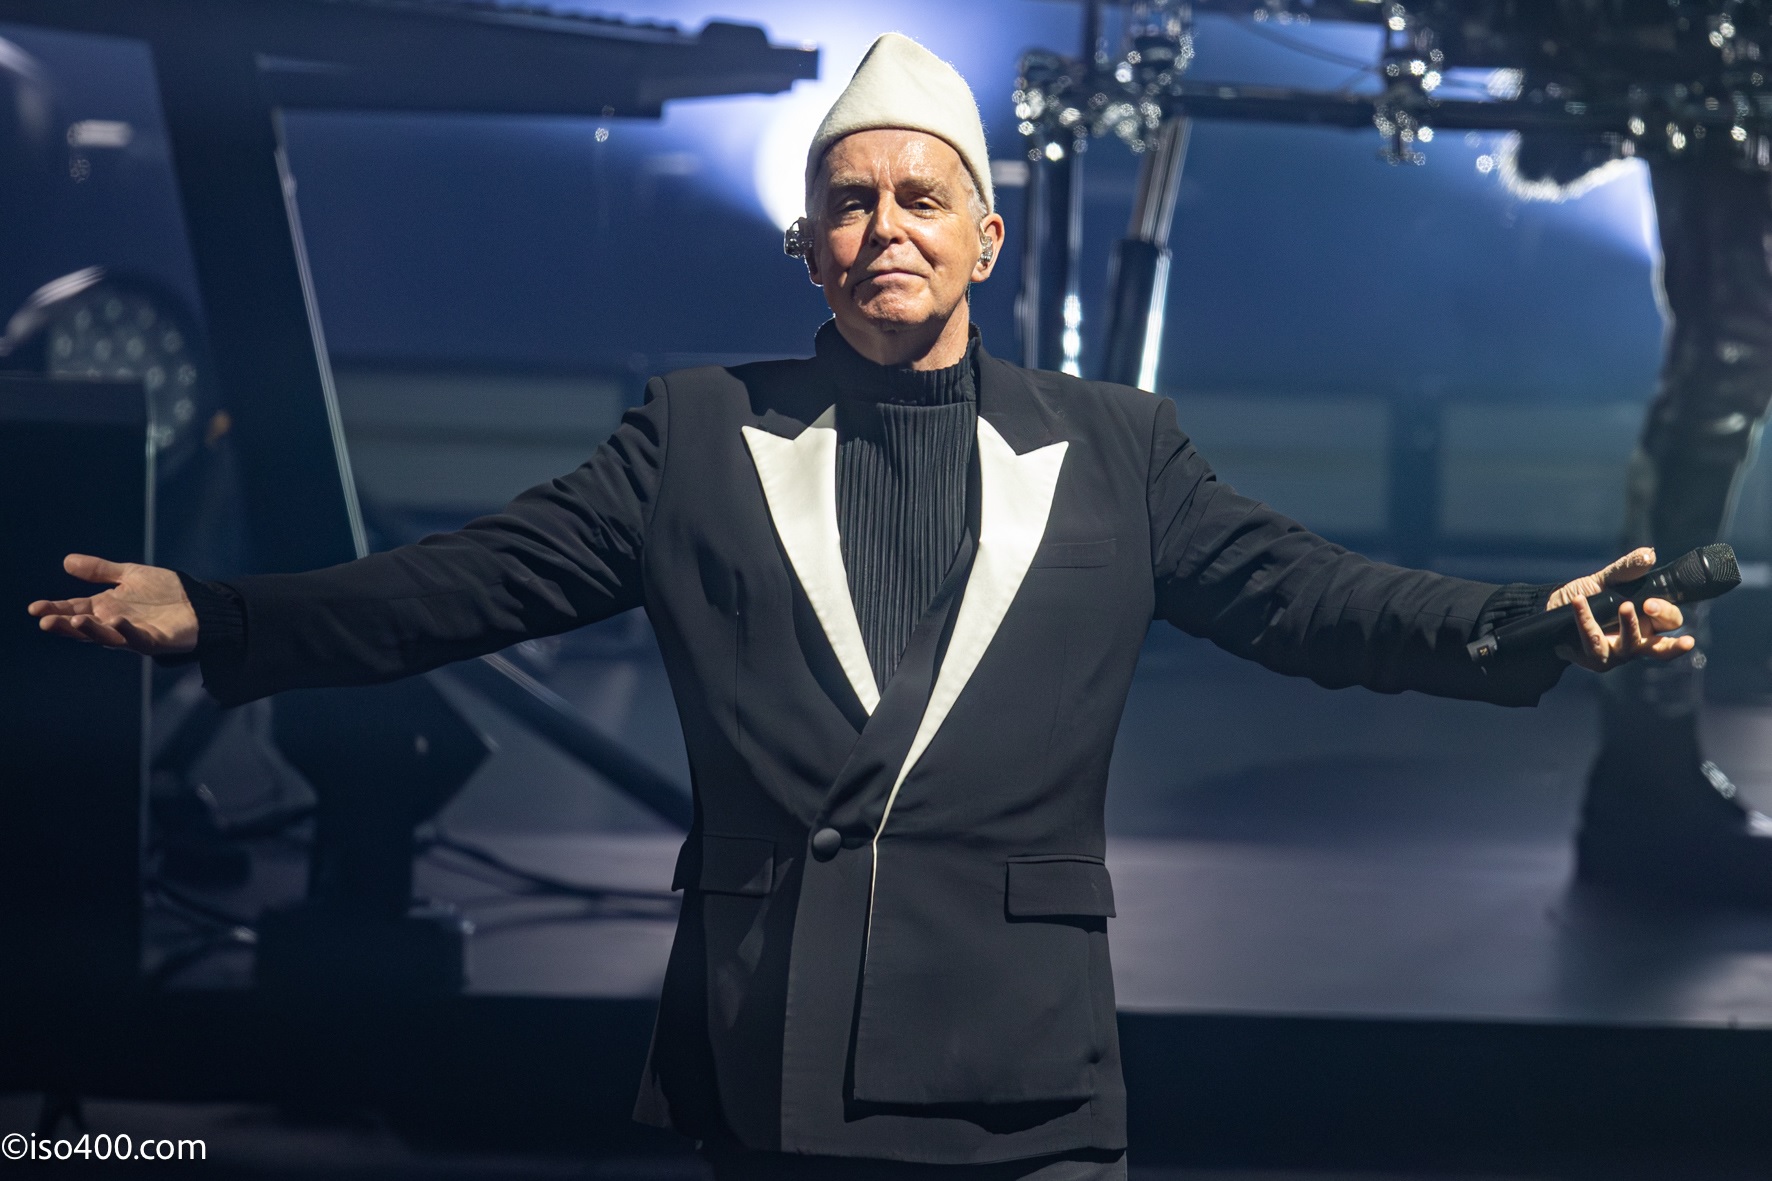 Pet Shop Boys play Brighton Centre on their 'Dreamworld: The Great